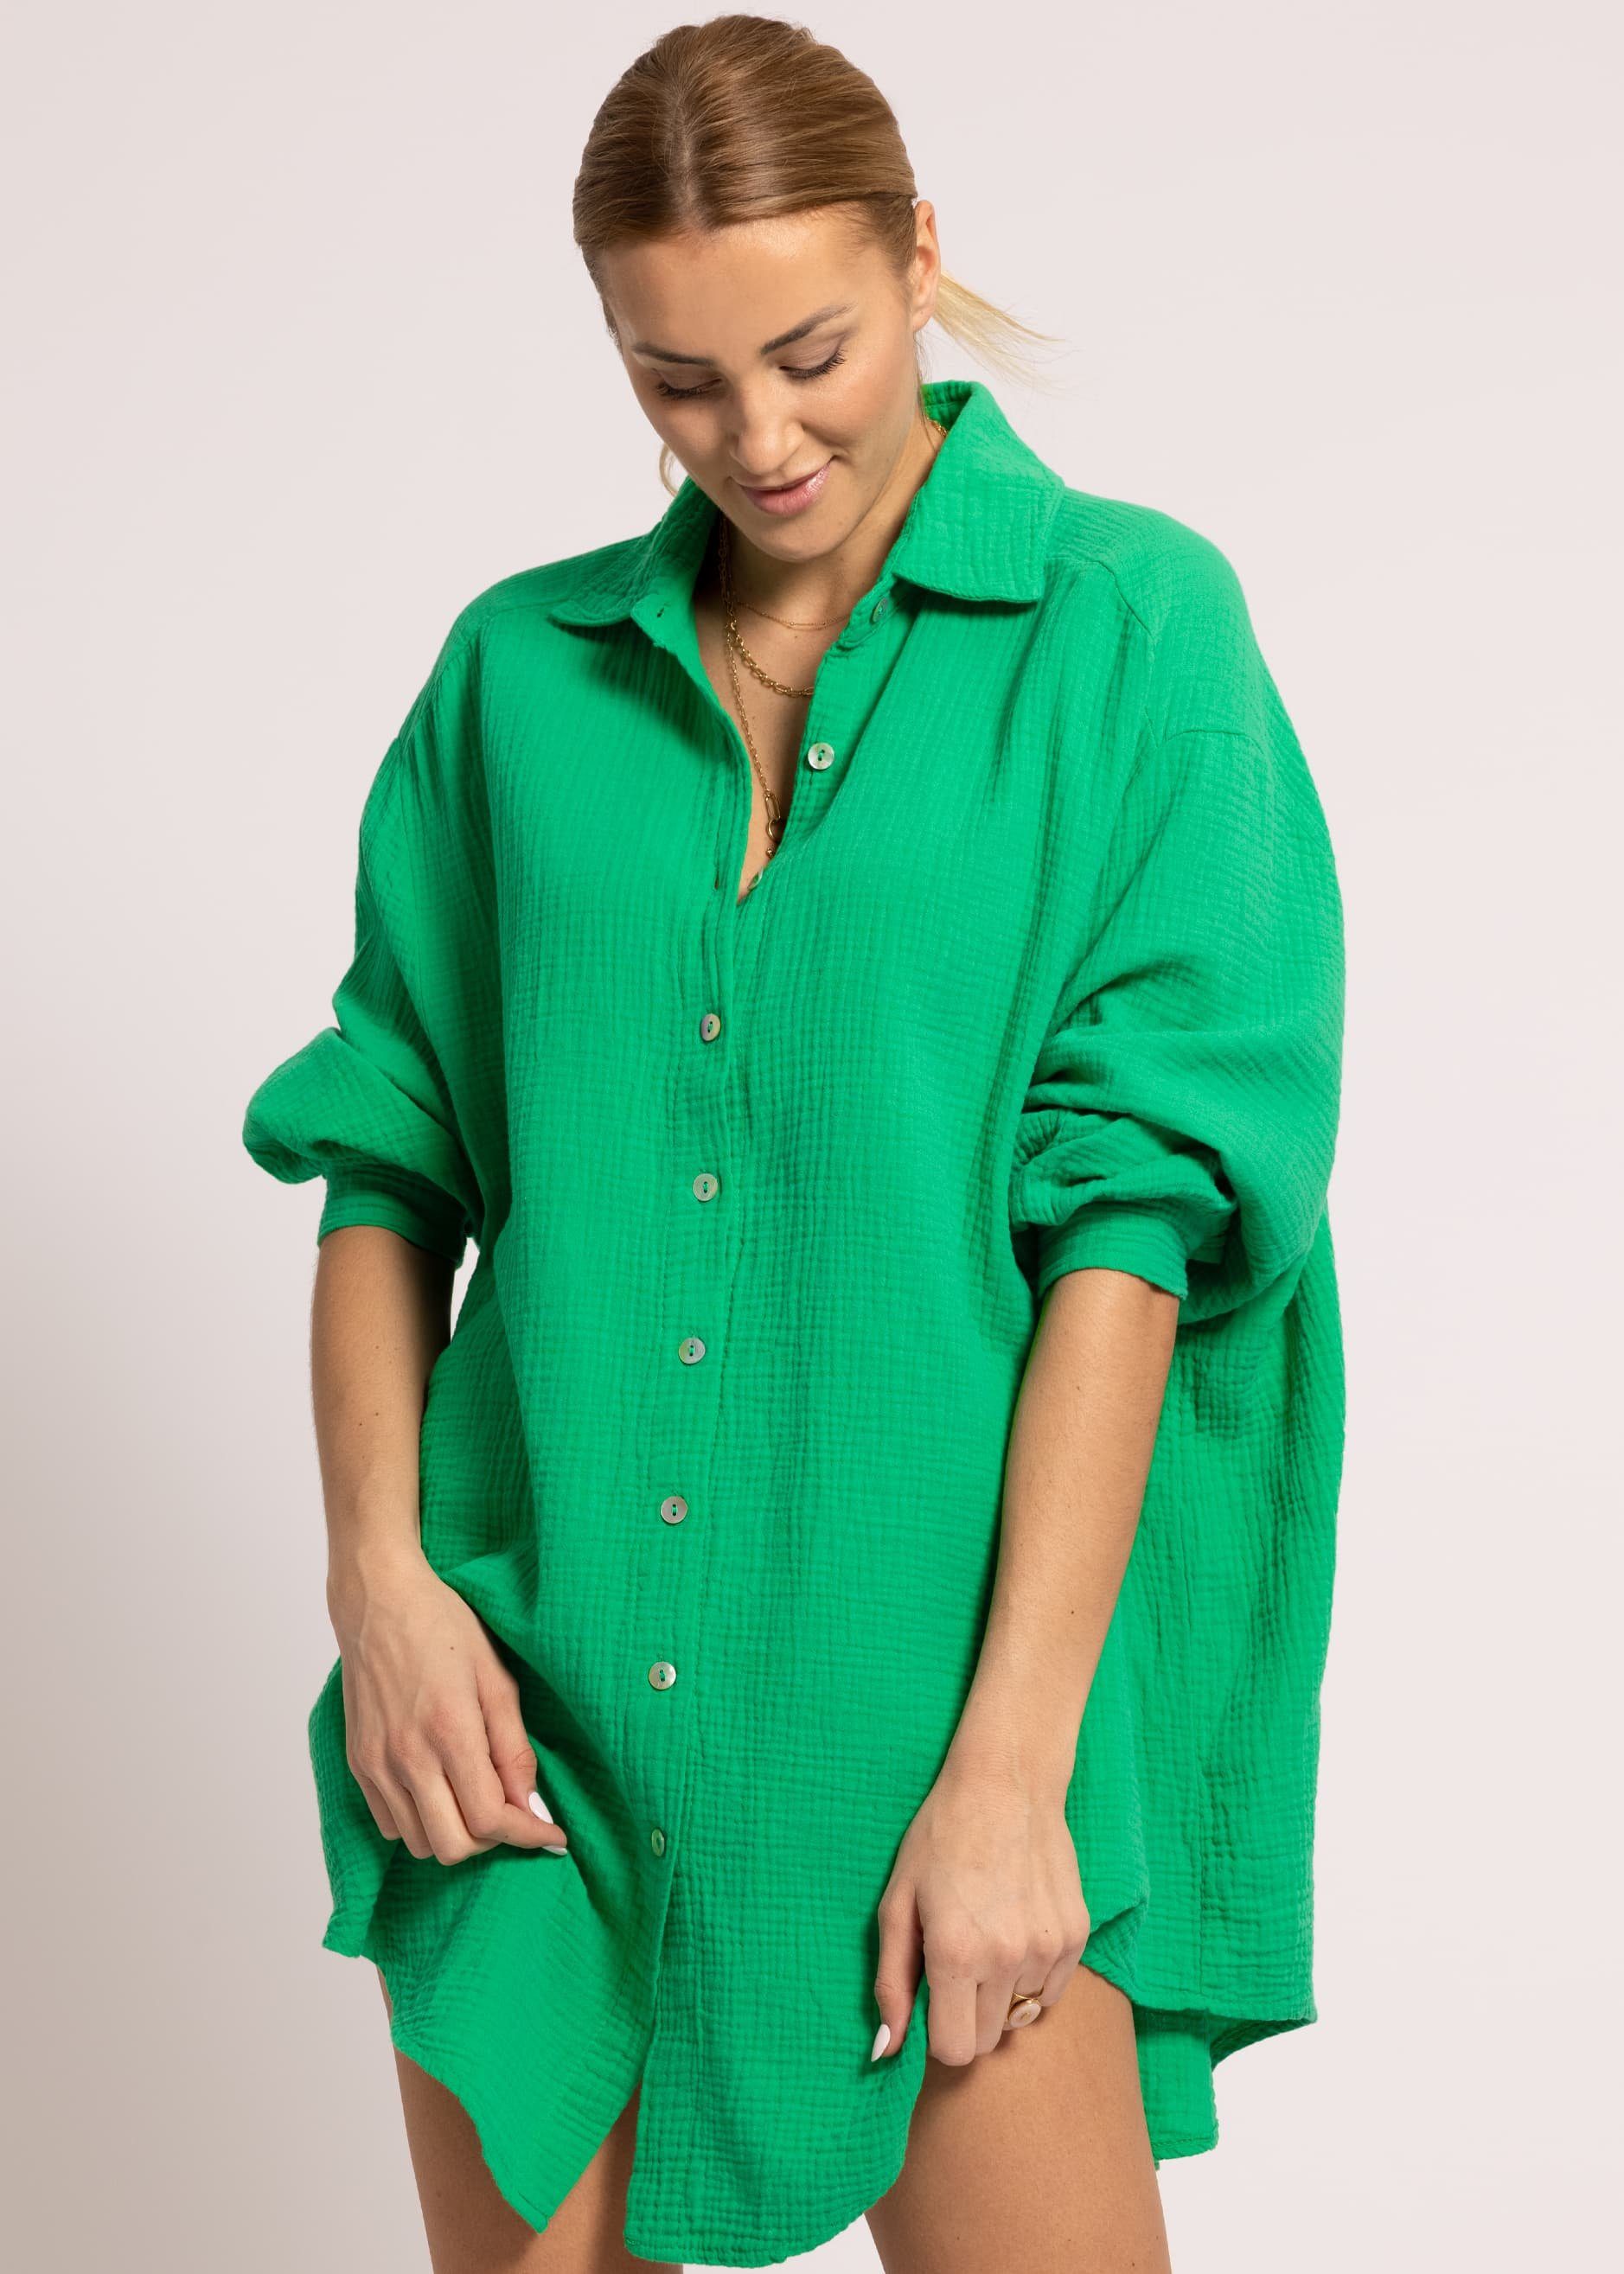 SASSYCLASSY Longbluse Oversize Musselin Bluse Damen Langarm Hemdbluse lang aus Baumwolle mit V-Ausschnitt, One Size (Gr. 36-48) Frühlingsgrün